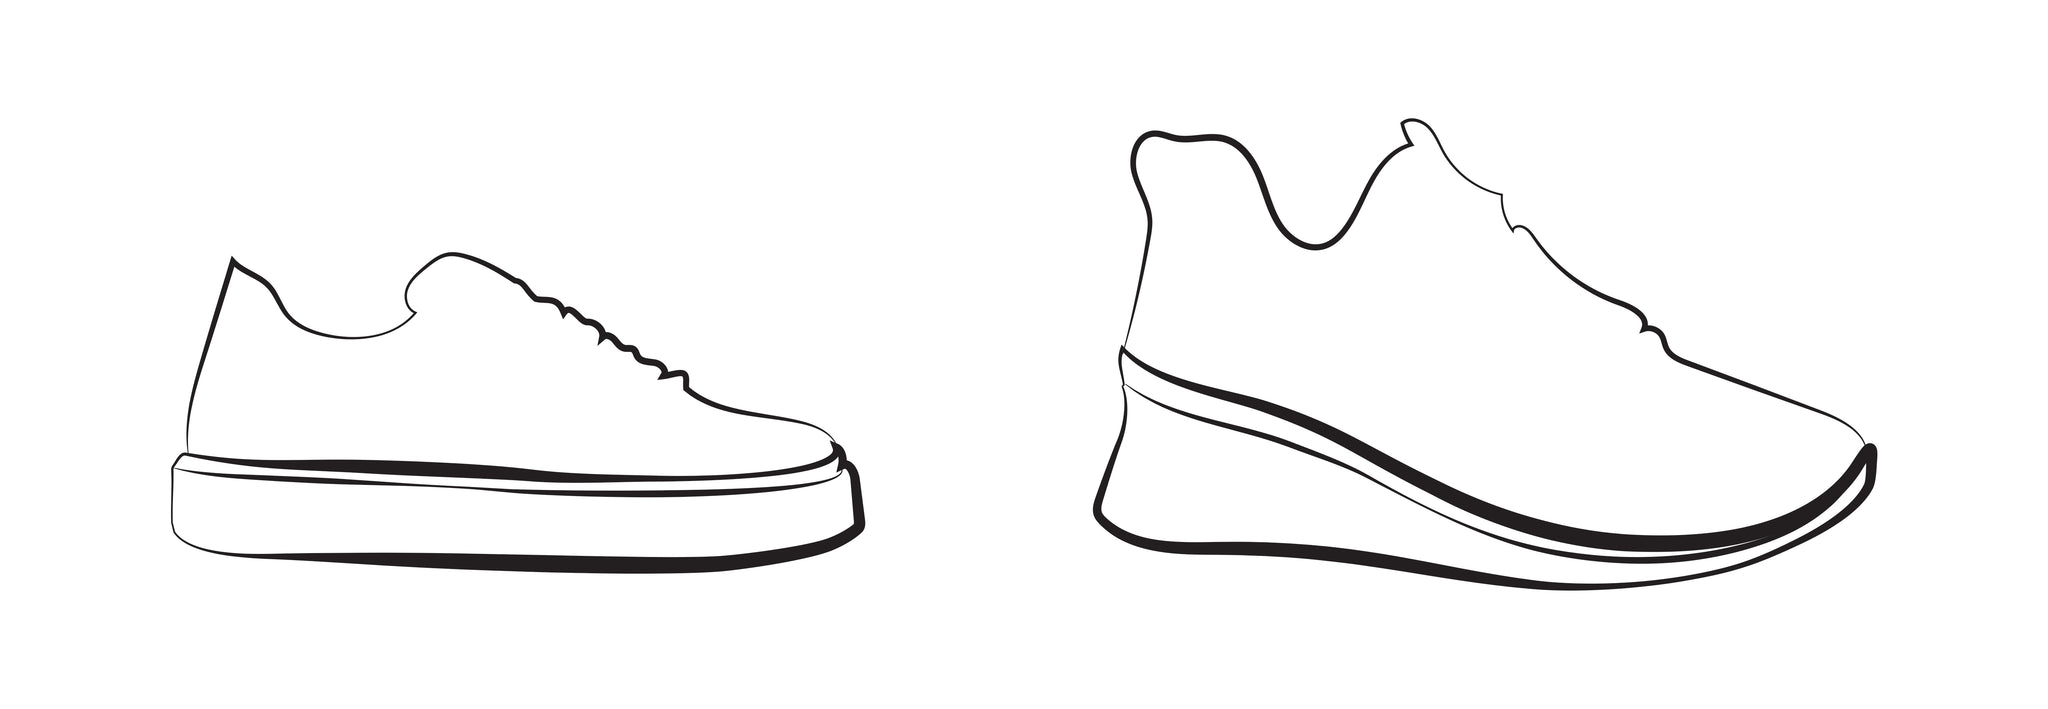 Anoosheh & Banafsheh Sneaker heels illustrations